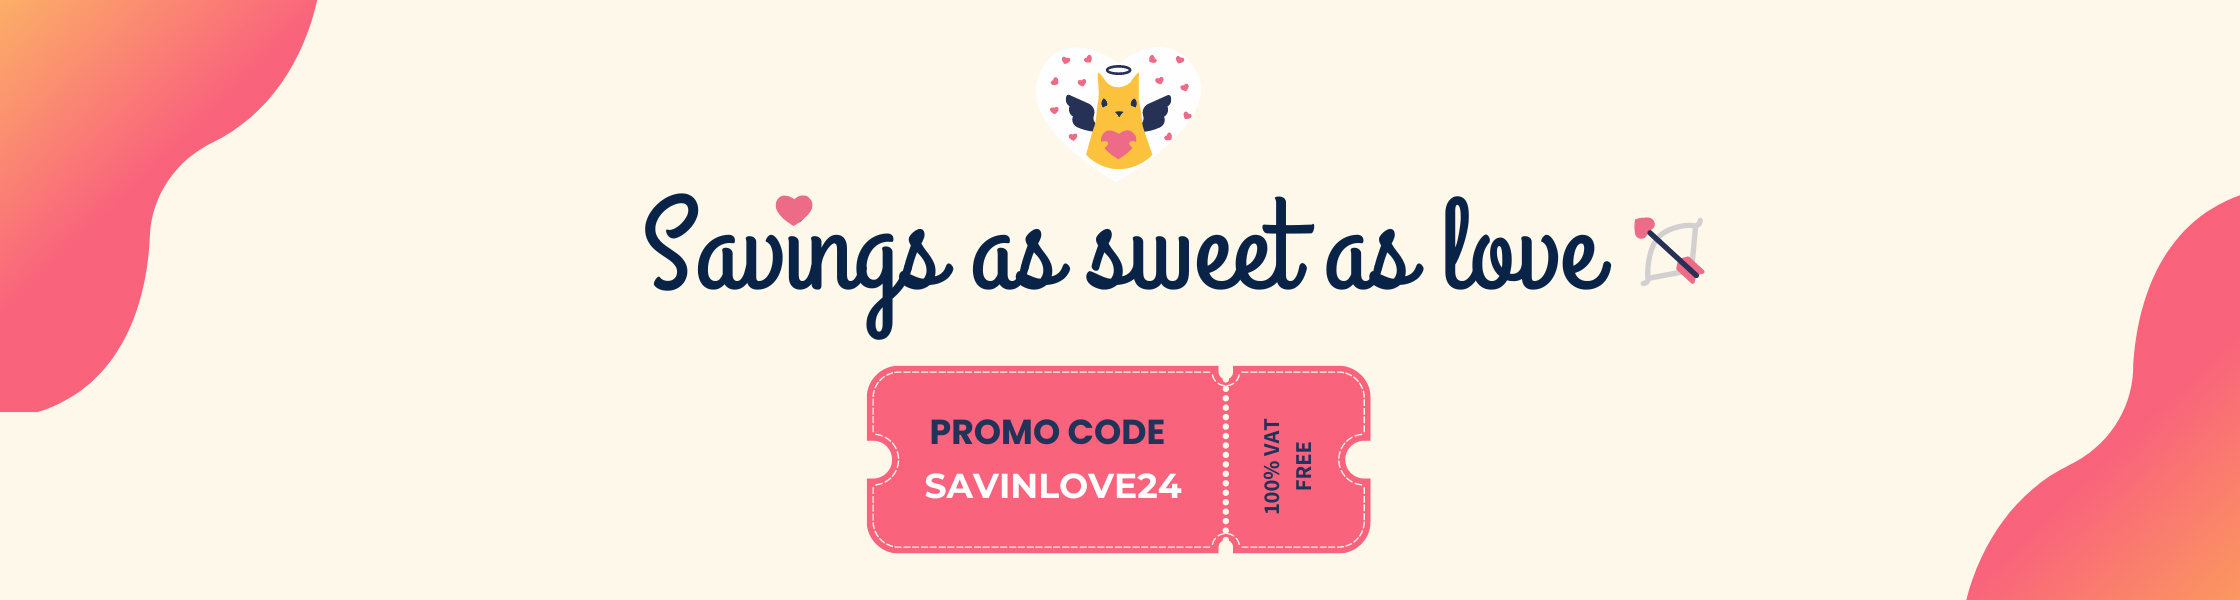 image ambiance Savin' savings as sweet as love